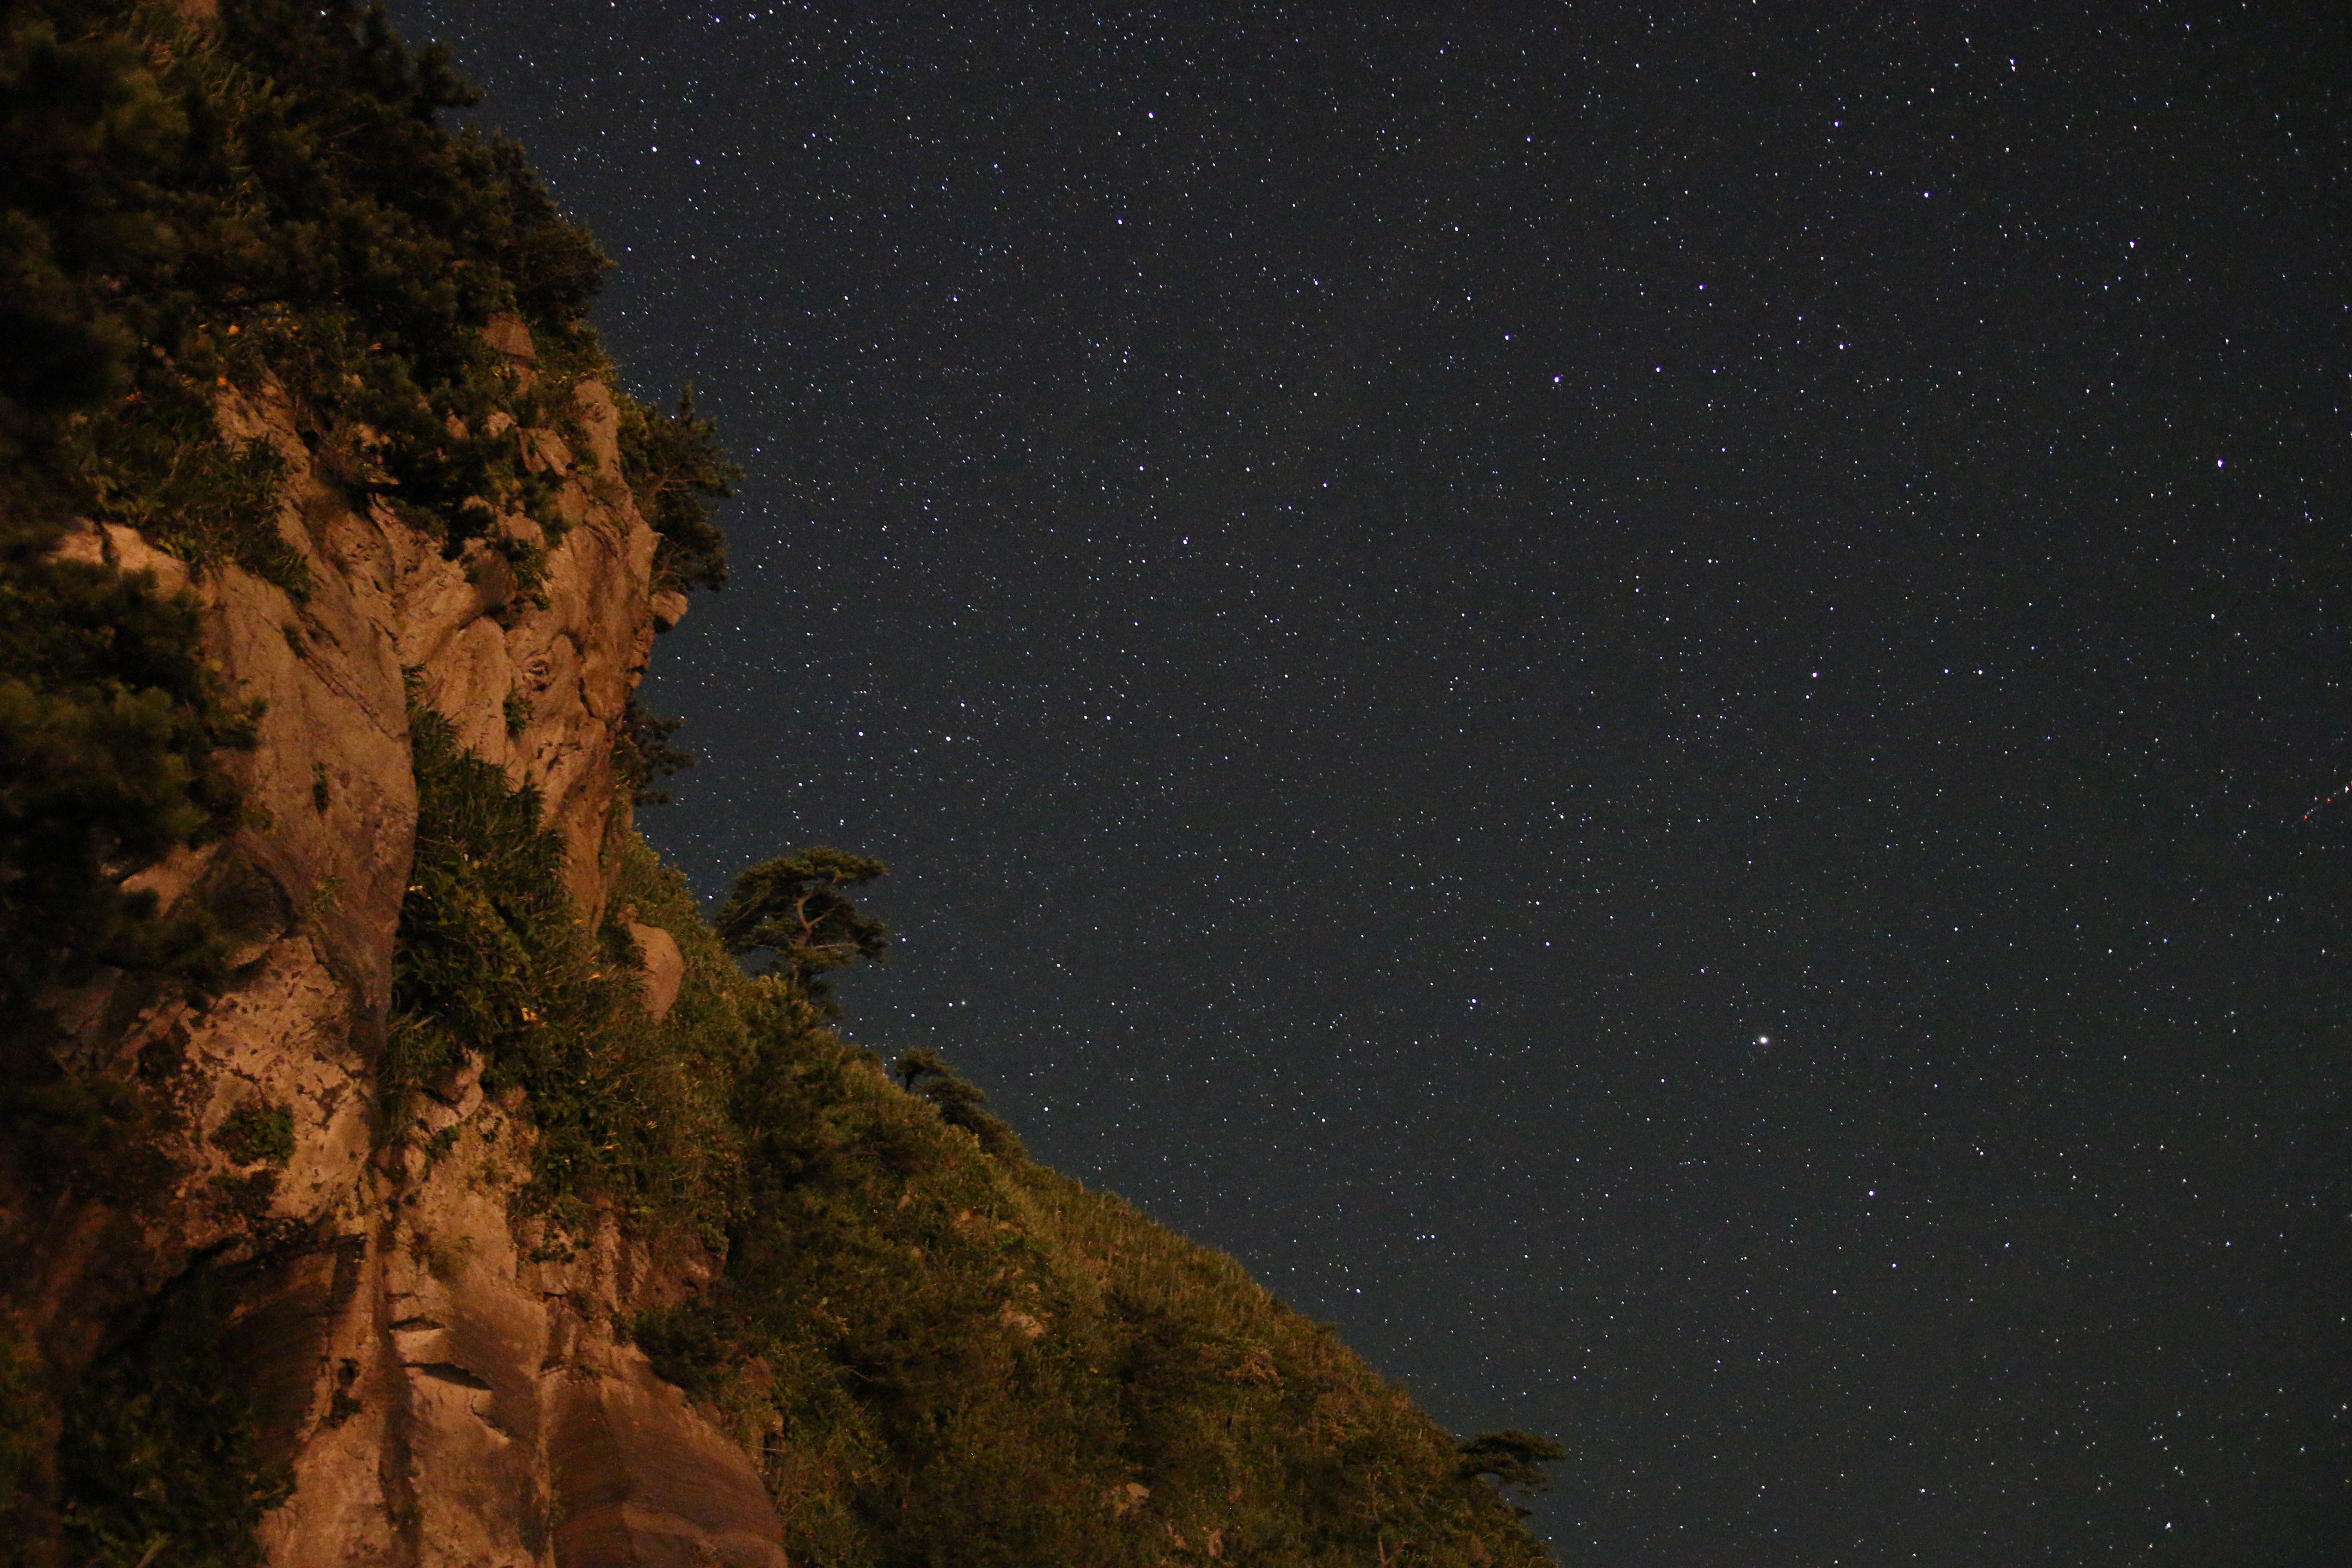 General 5472x3648 stars landscape starry night starred sky night trees nature looking up rocks